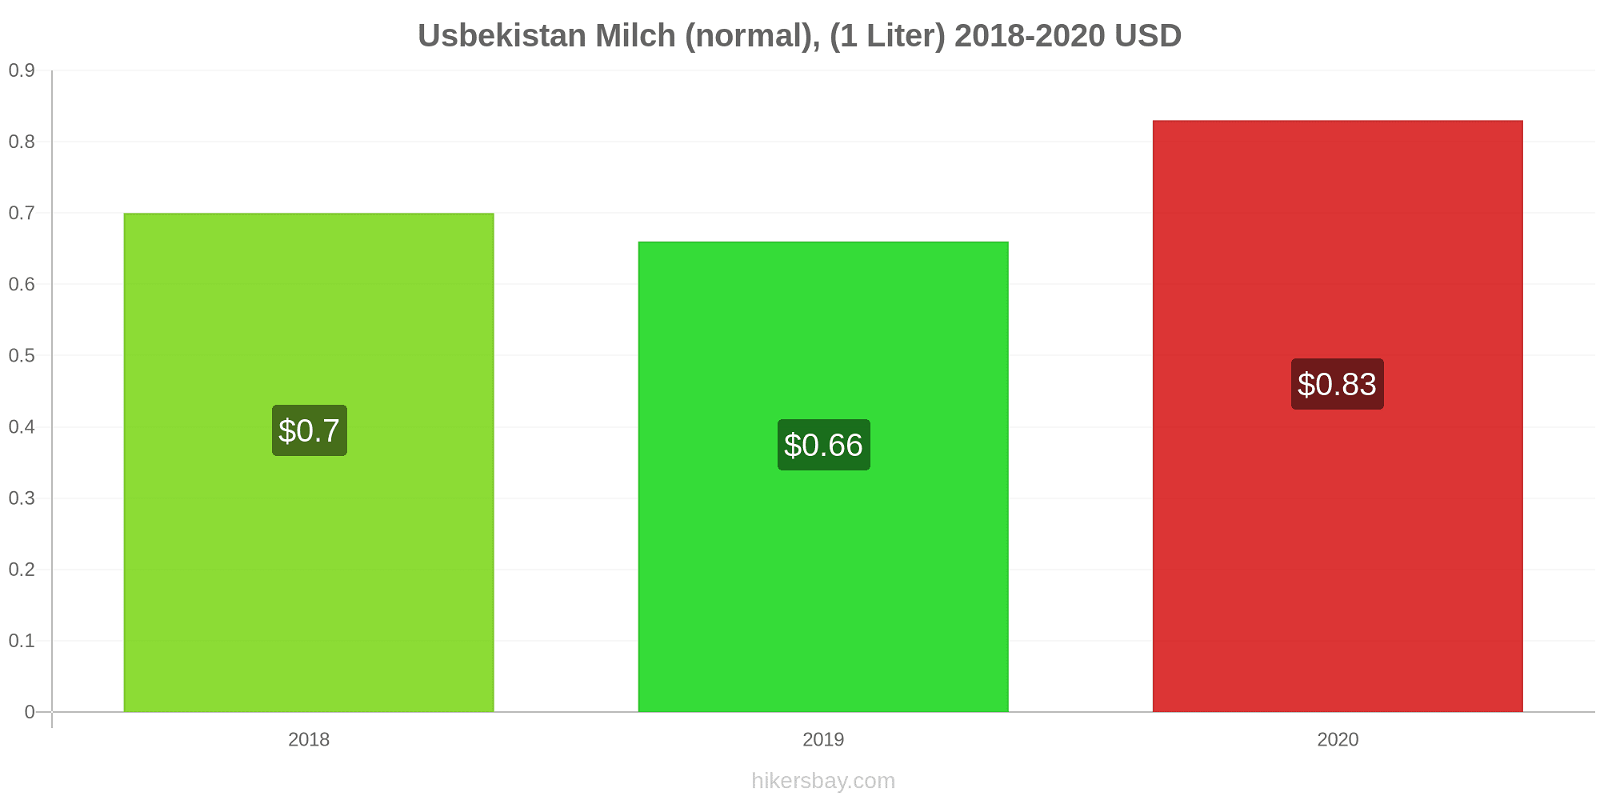 Usbekistan Preisänderungen (Regulär), Milch (1 Liter) hikersbay.com